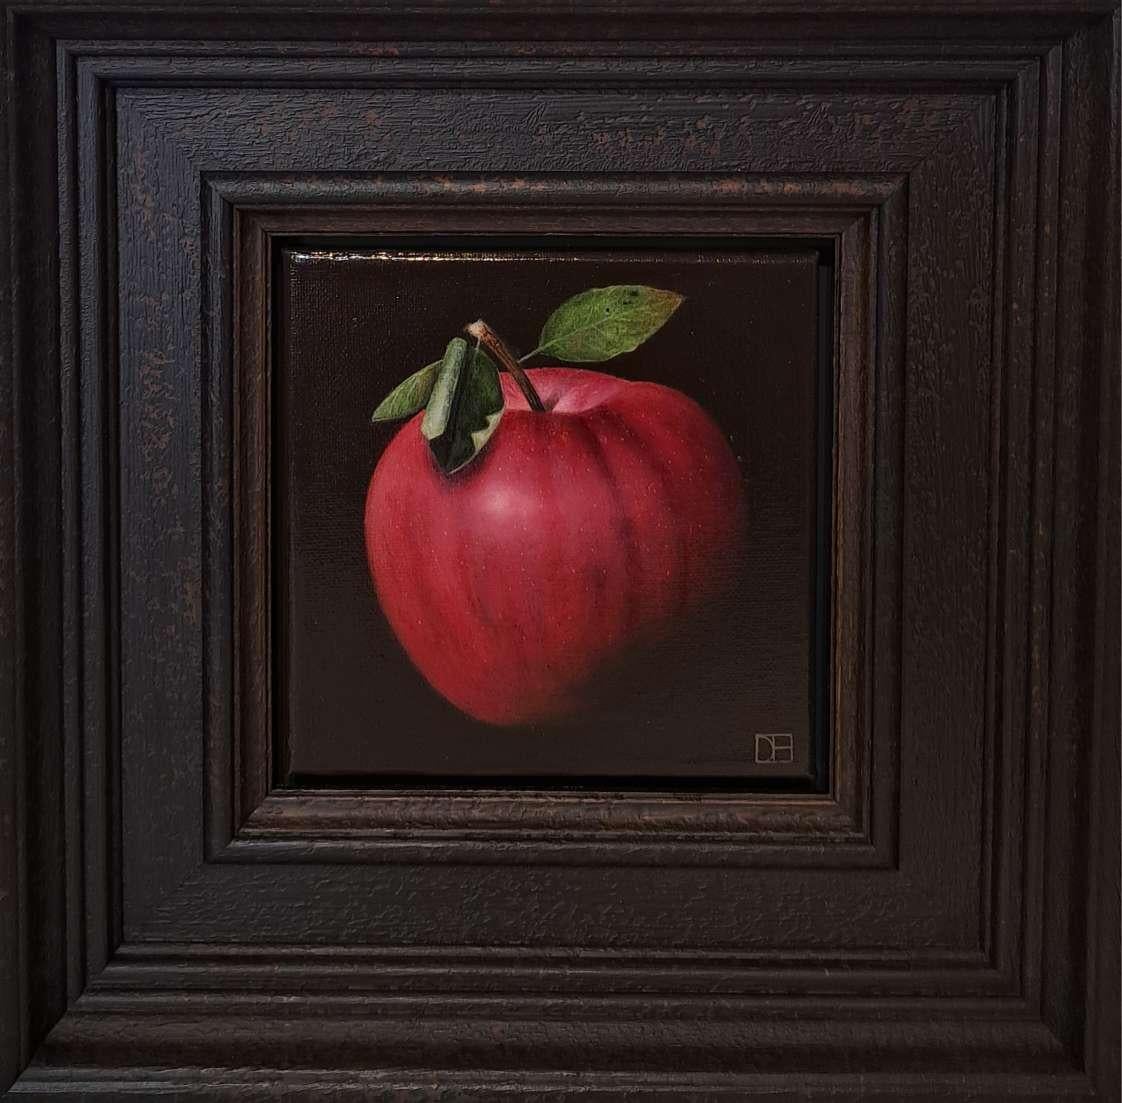 Sehr glänzender, sehr roter Apfel